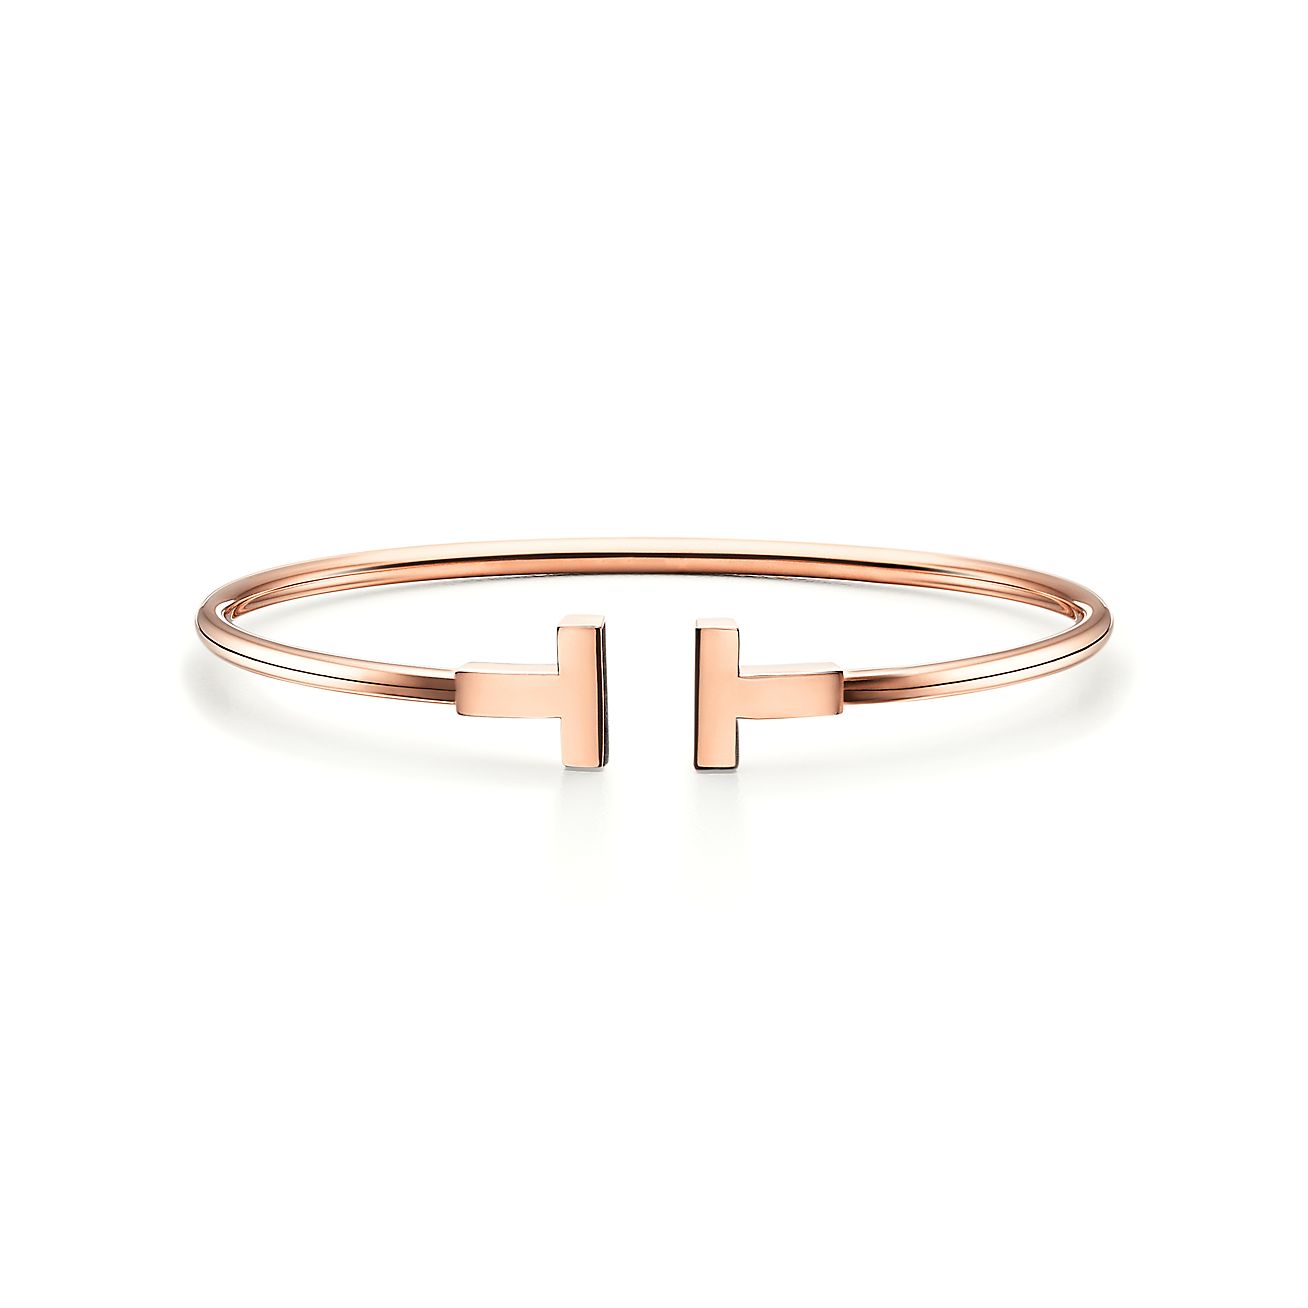 Tiffany T wire bracelet in 18k rose gold, medium. | Tiffany & Co.